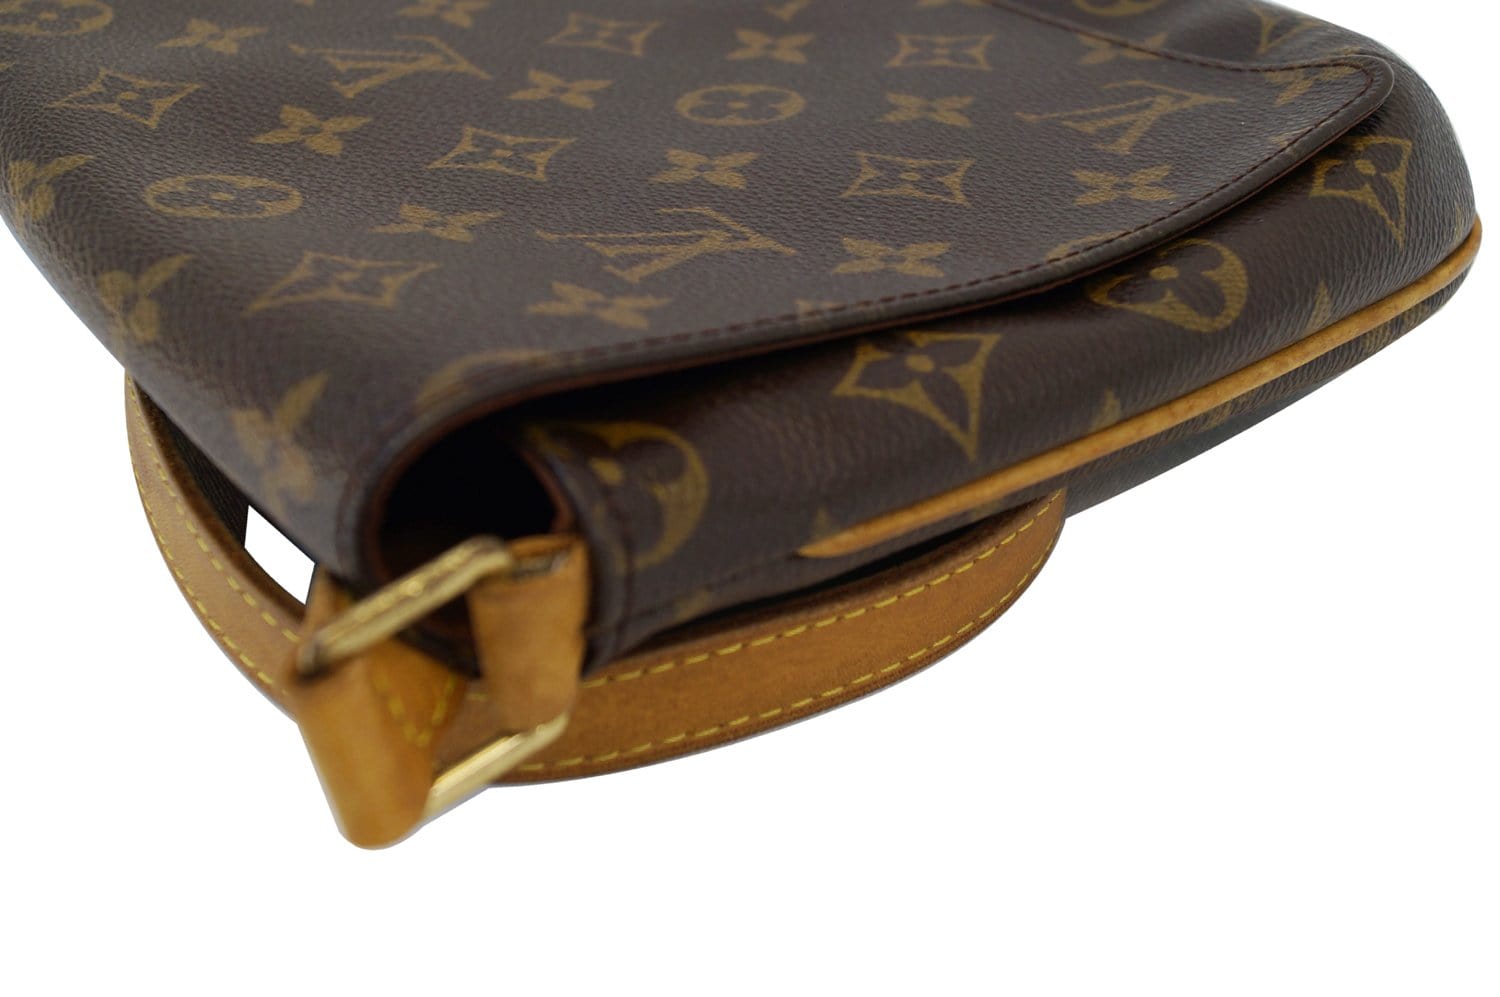 LOUIS VUITTON Monogram Musette Tango Bag w/ Long Strap Crossbody Bag